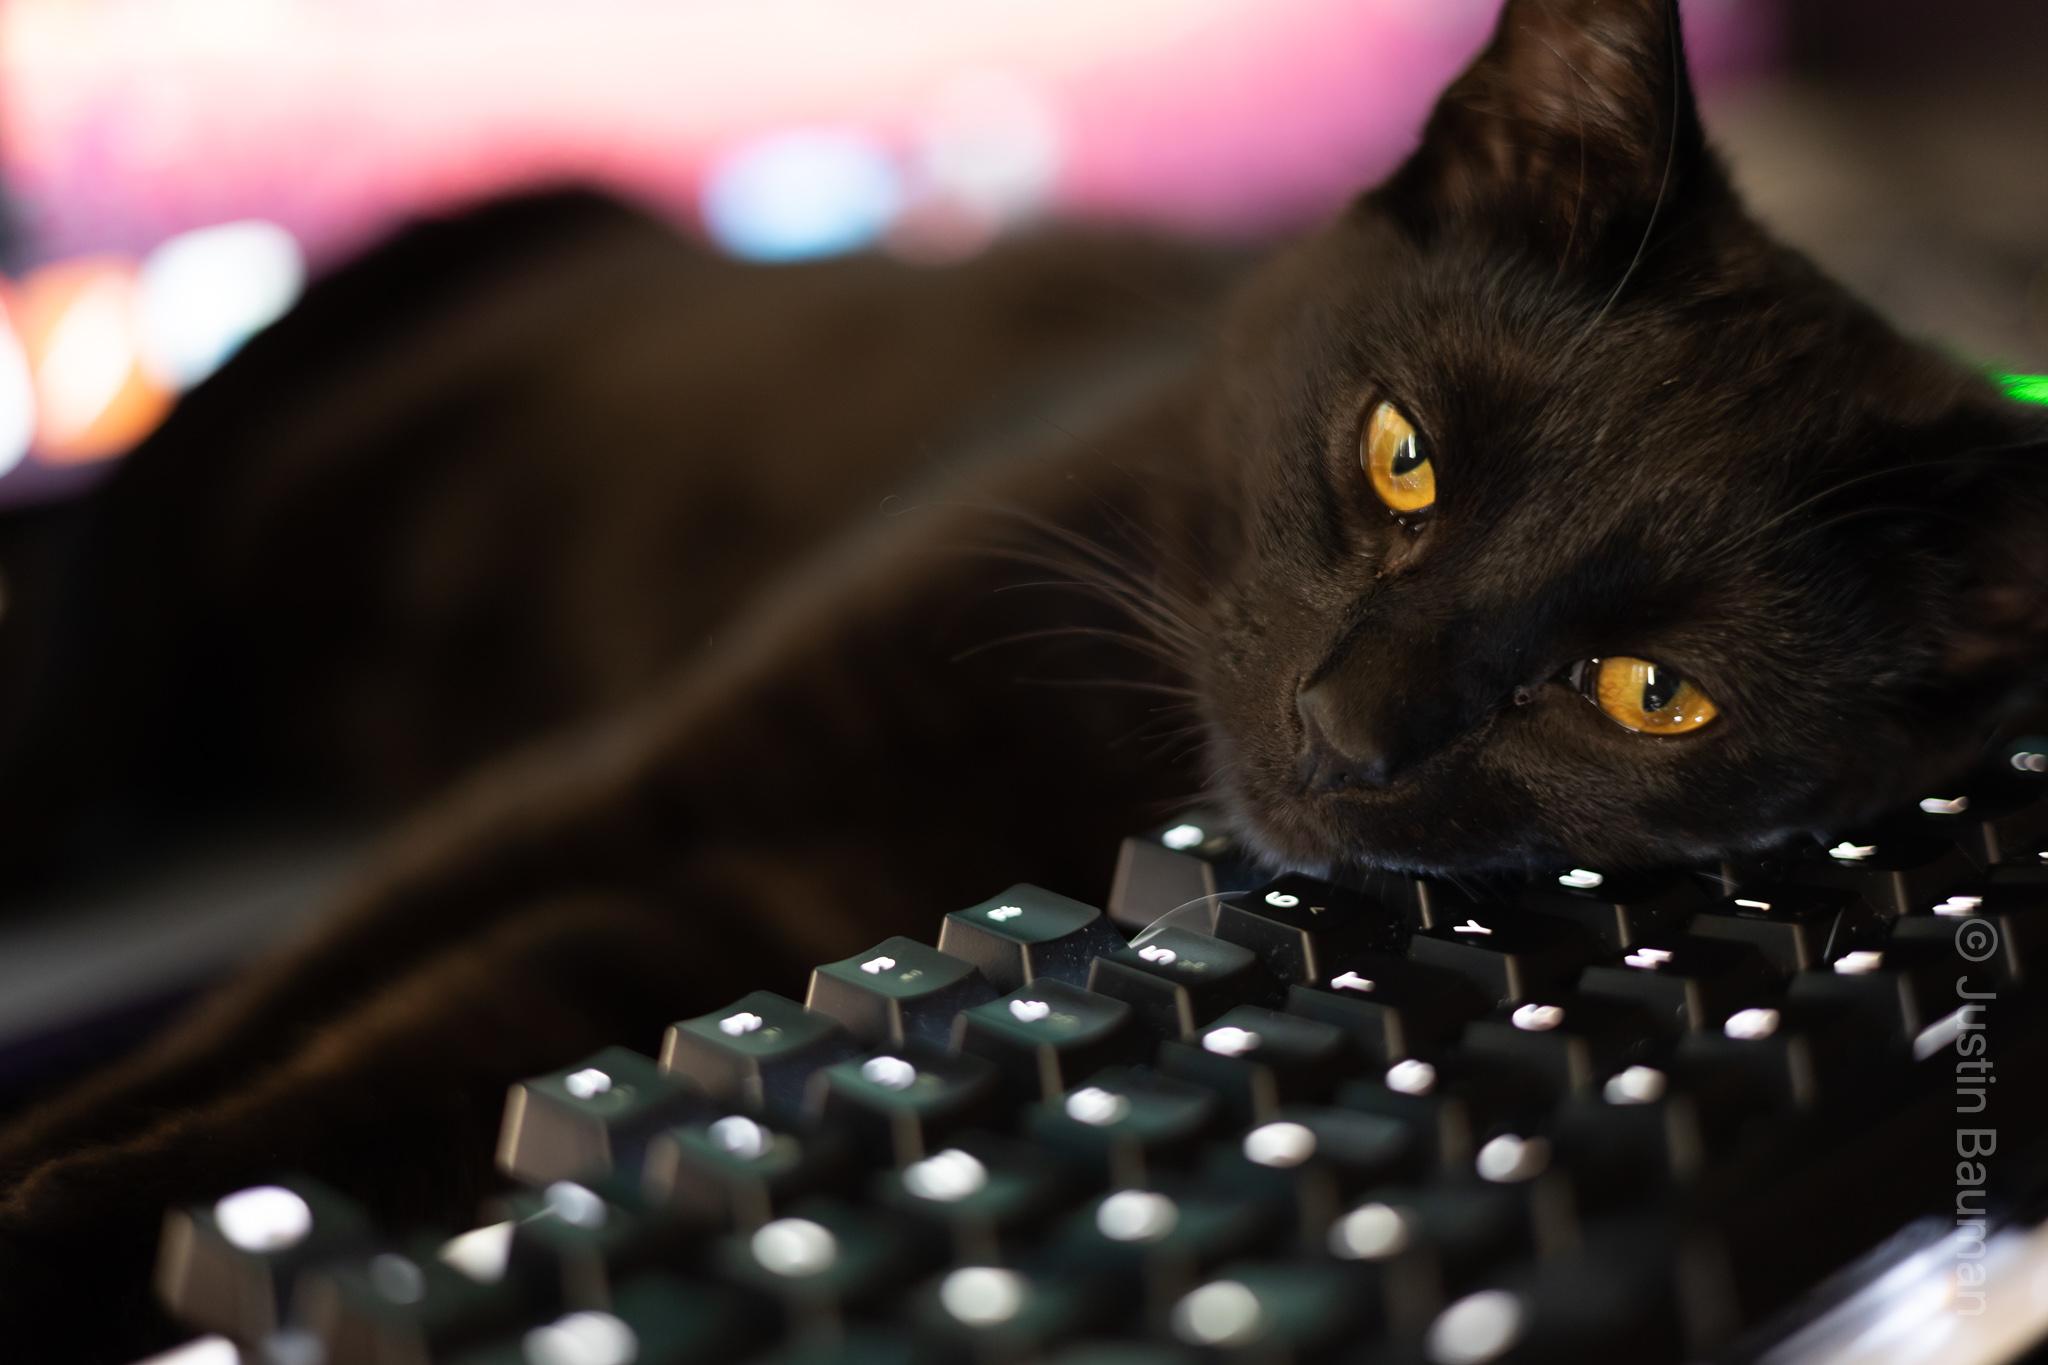 Luna putting head on computer keyboard.